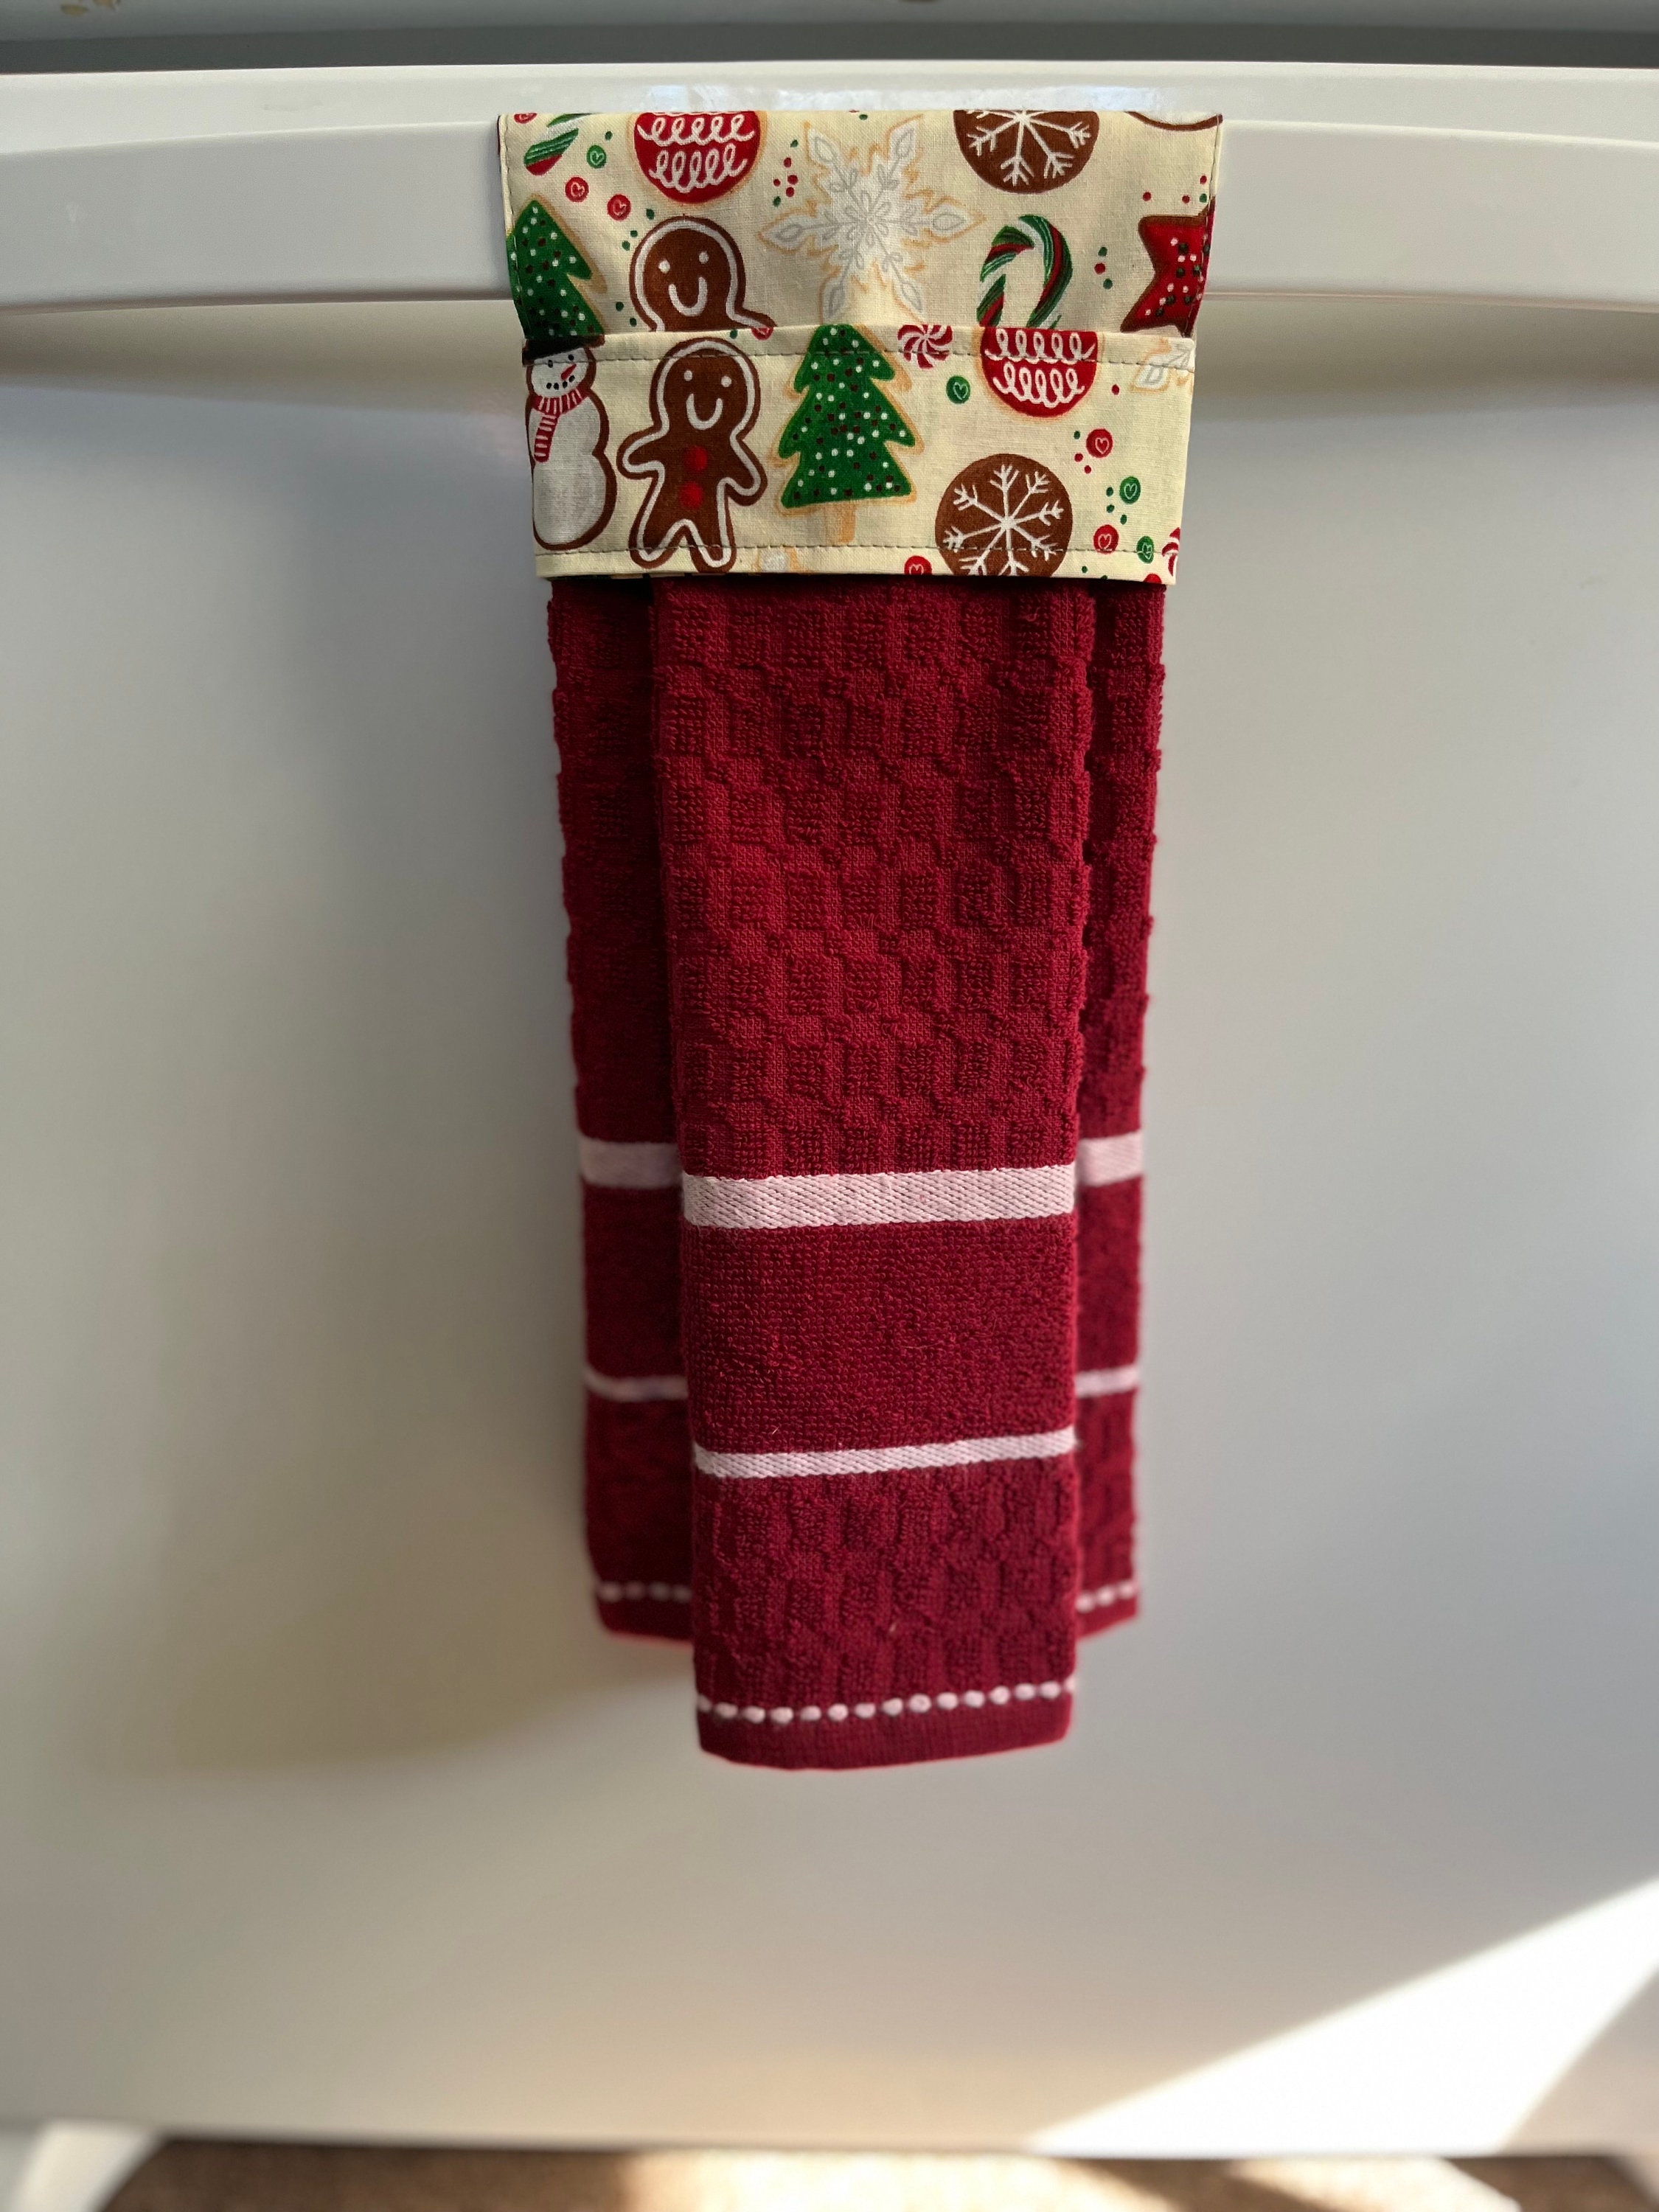 visesunny Cute Ladybug Kitchen Dish Towel with Hanging Loop